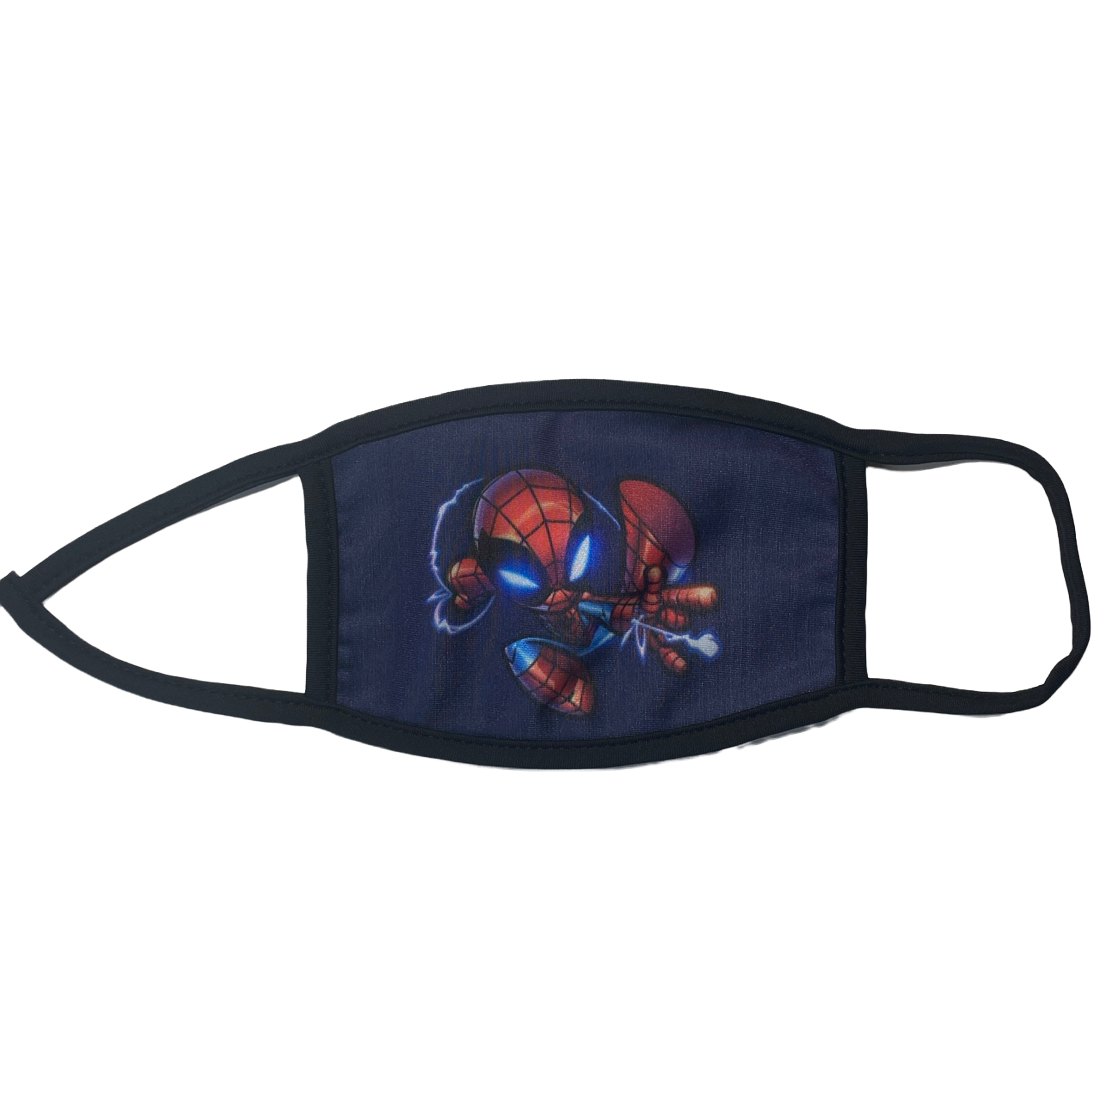 Kids Reusable Fabric Cotton Masks Mask SPIRIT SPARKPLUGS Navy Spiderman  